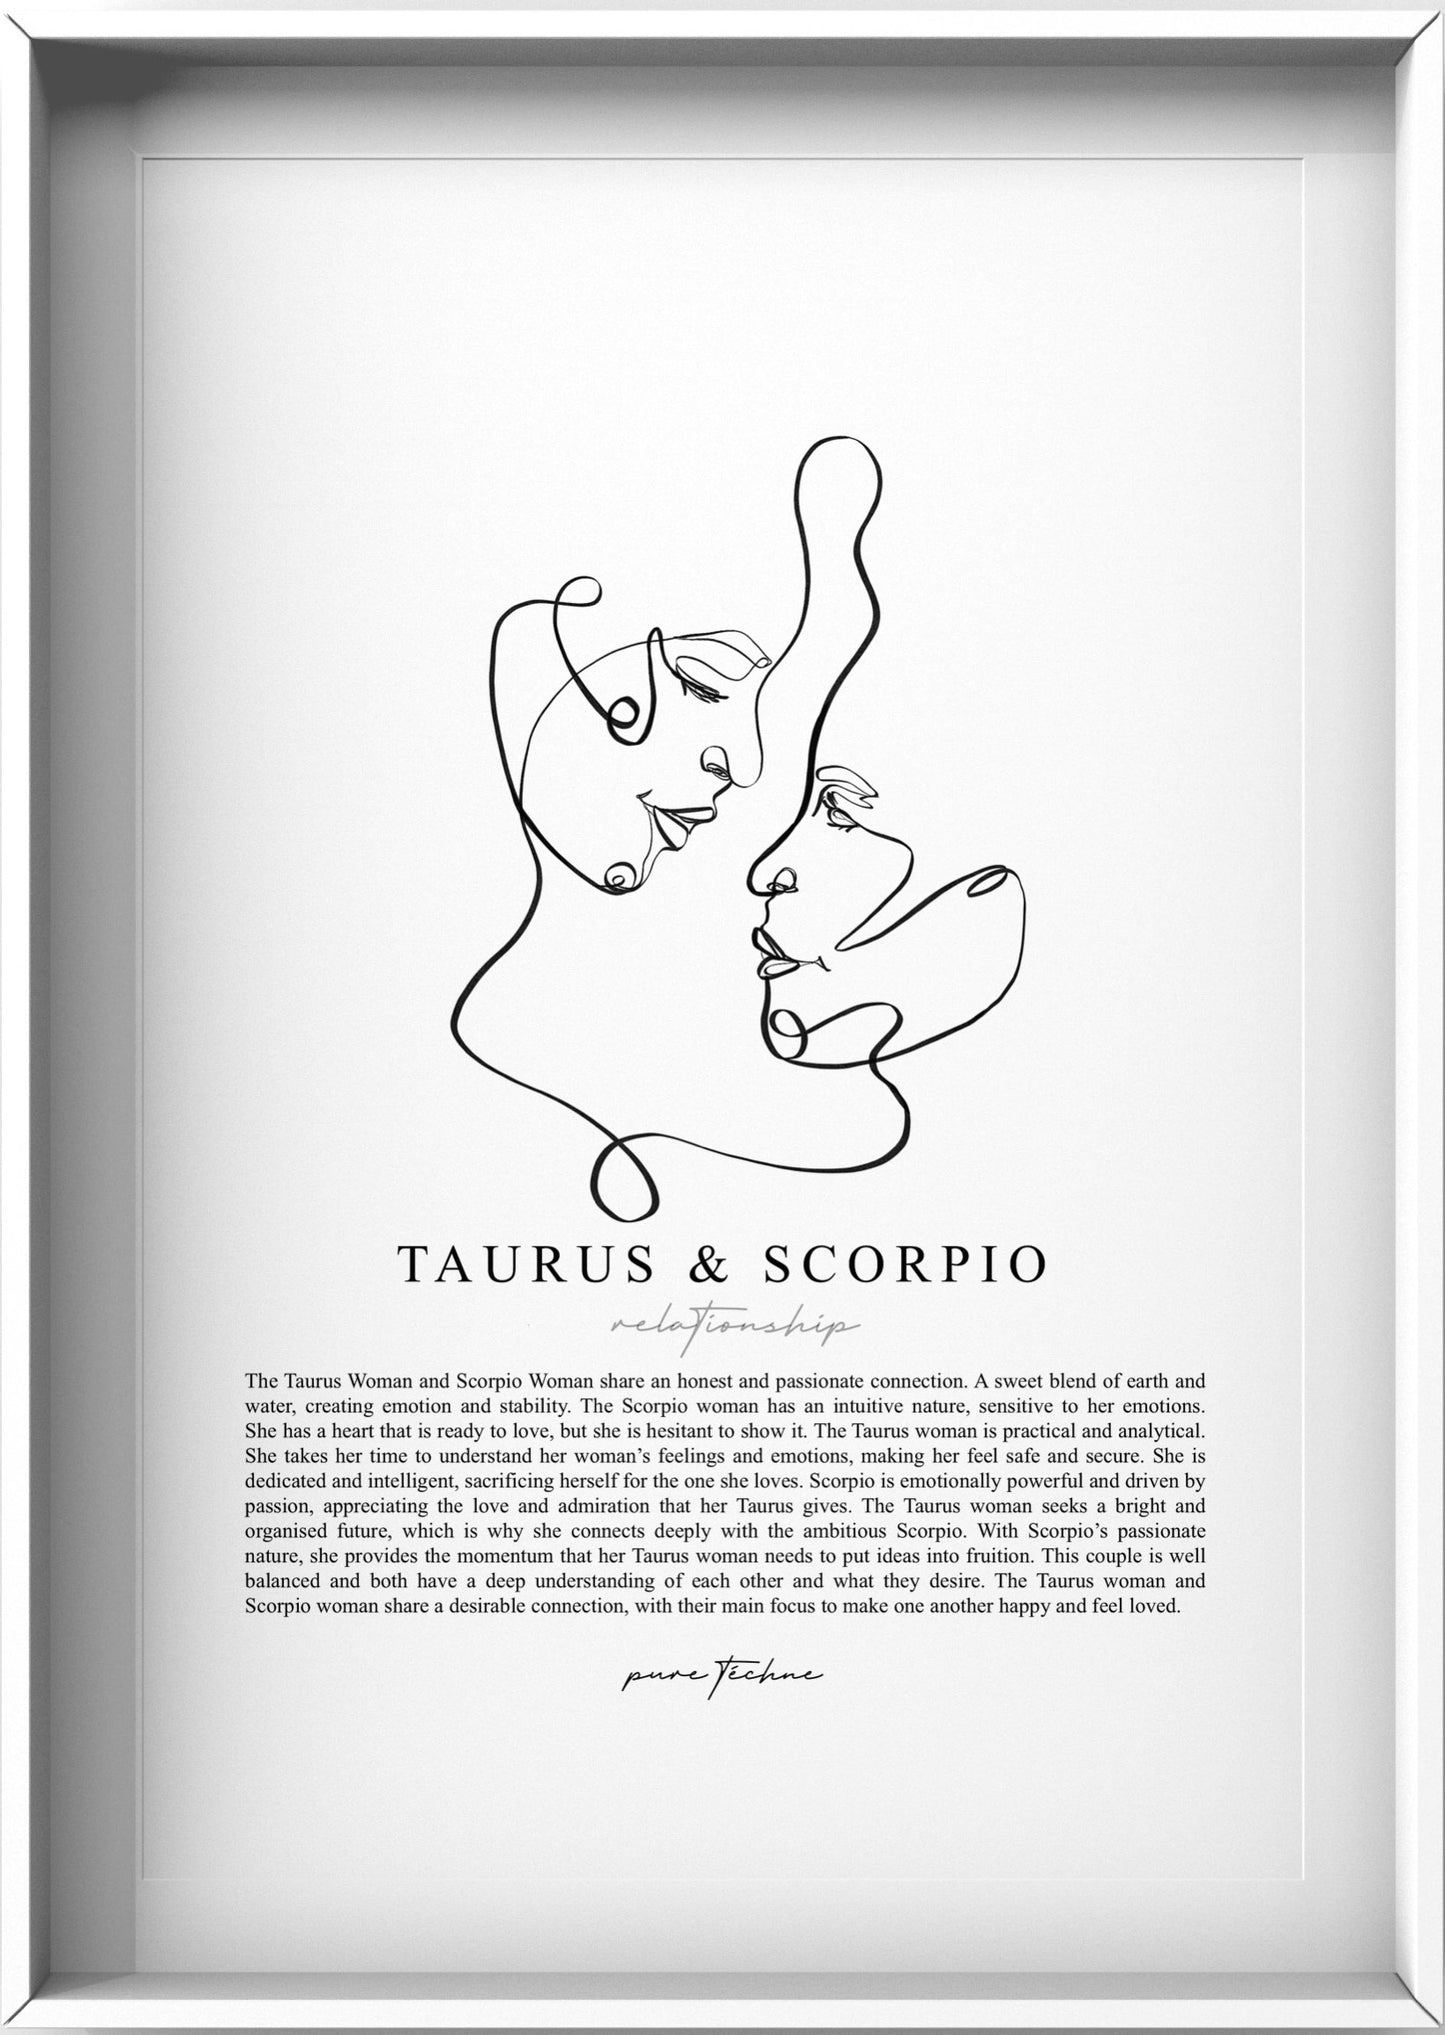 Taurus Woman & Scorpio Woman